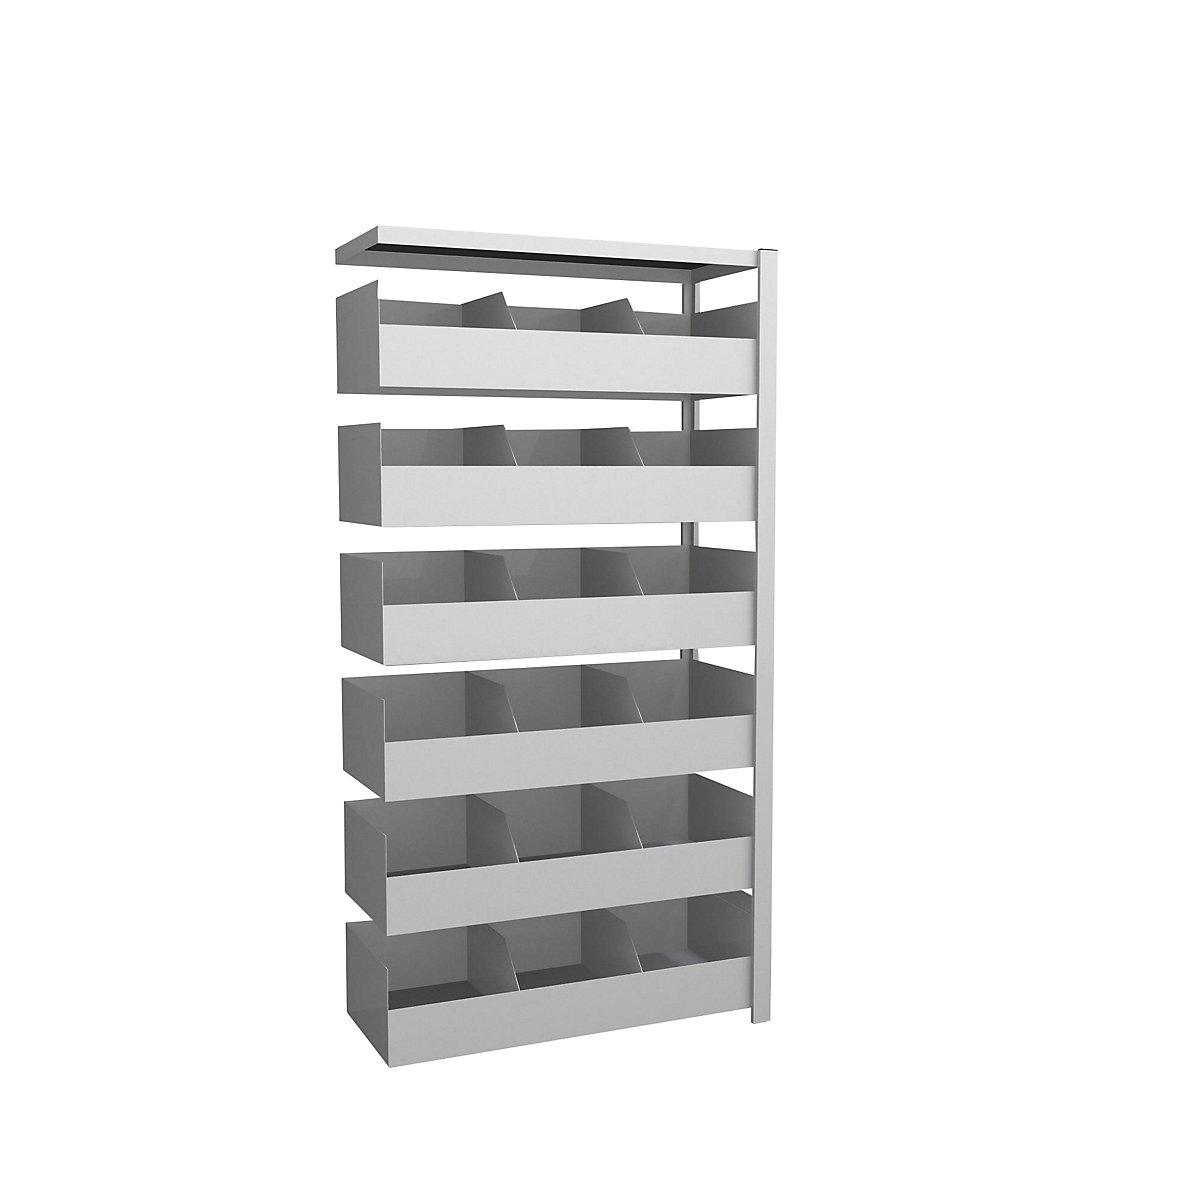 Bulk material shelving unit – hofe, shelf height 2000 mm, extension shelf unit, WxD 1010 x 435 mm